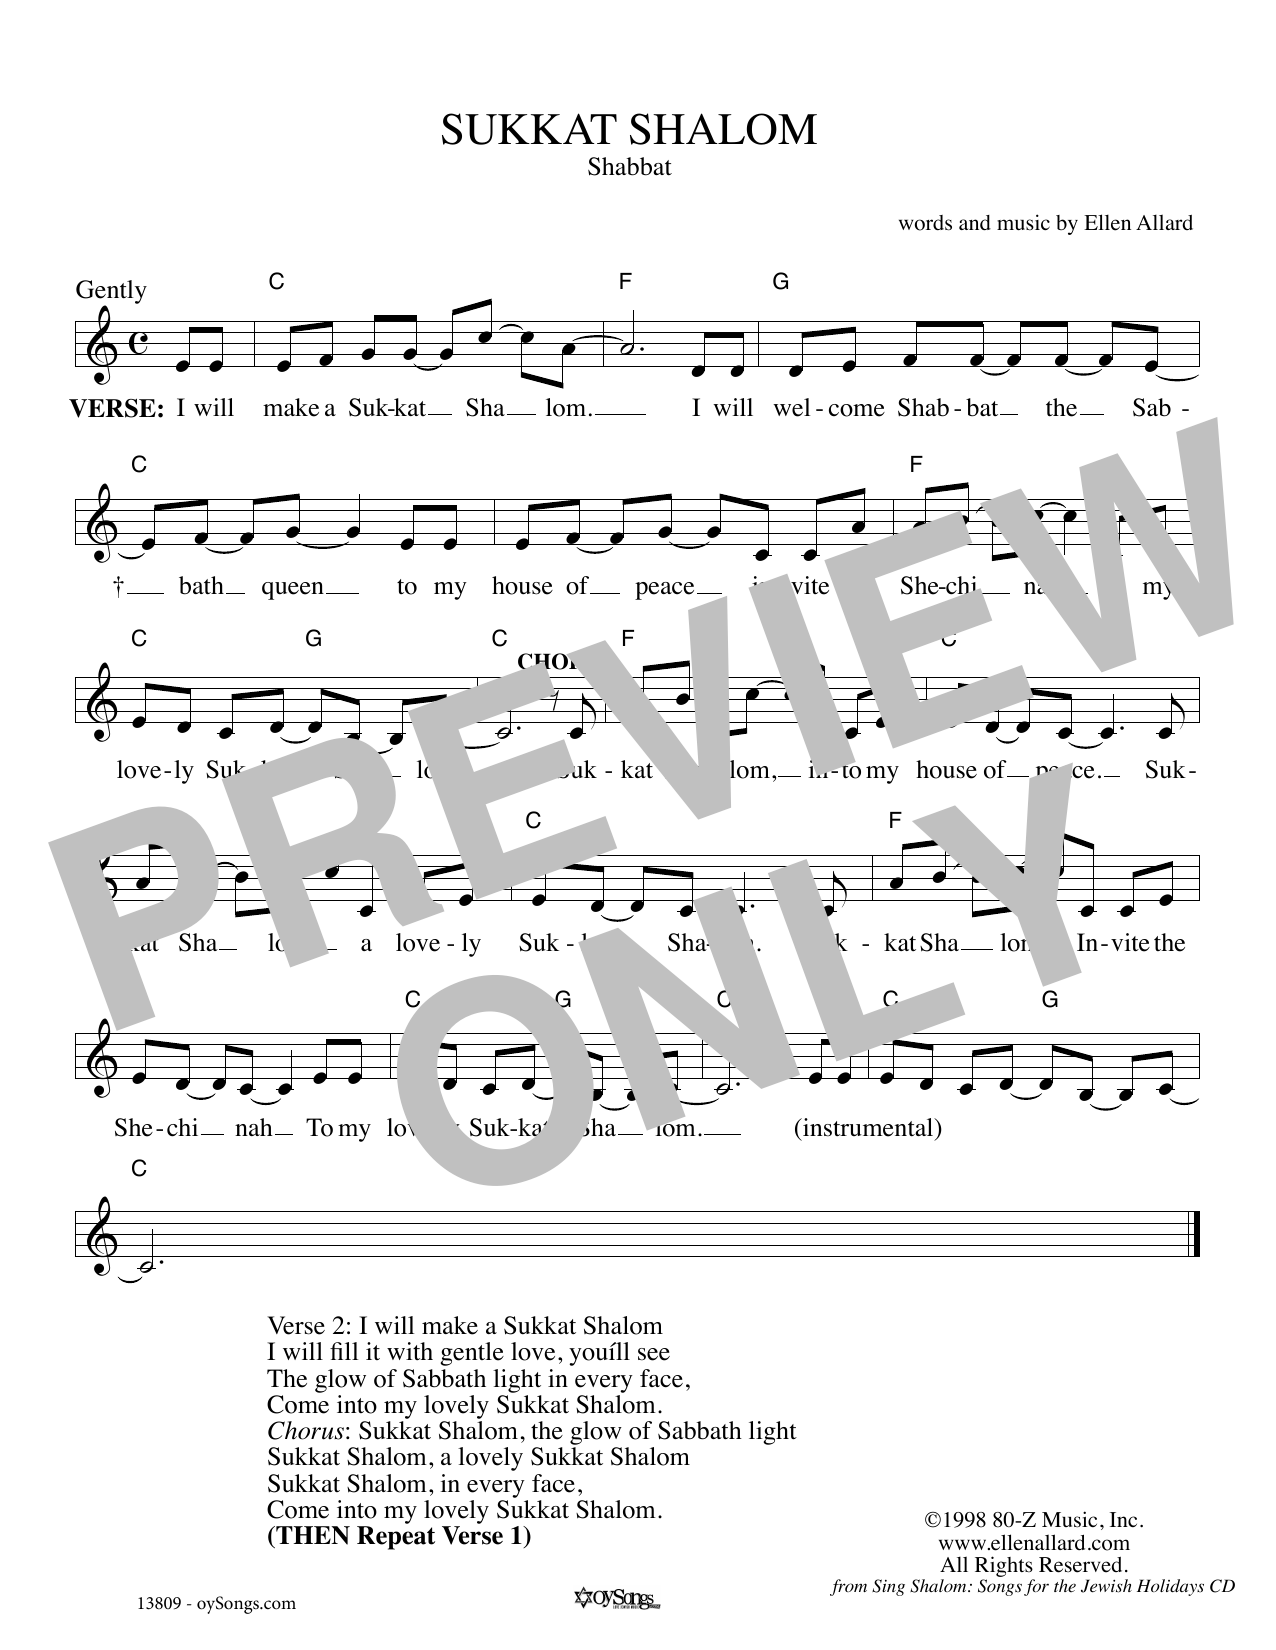 Ellen Allard Sukkat Shalom Sheet Music Notes & Chords for Melody Line, Lyrics & Chords - Download or Print PDF